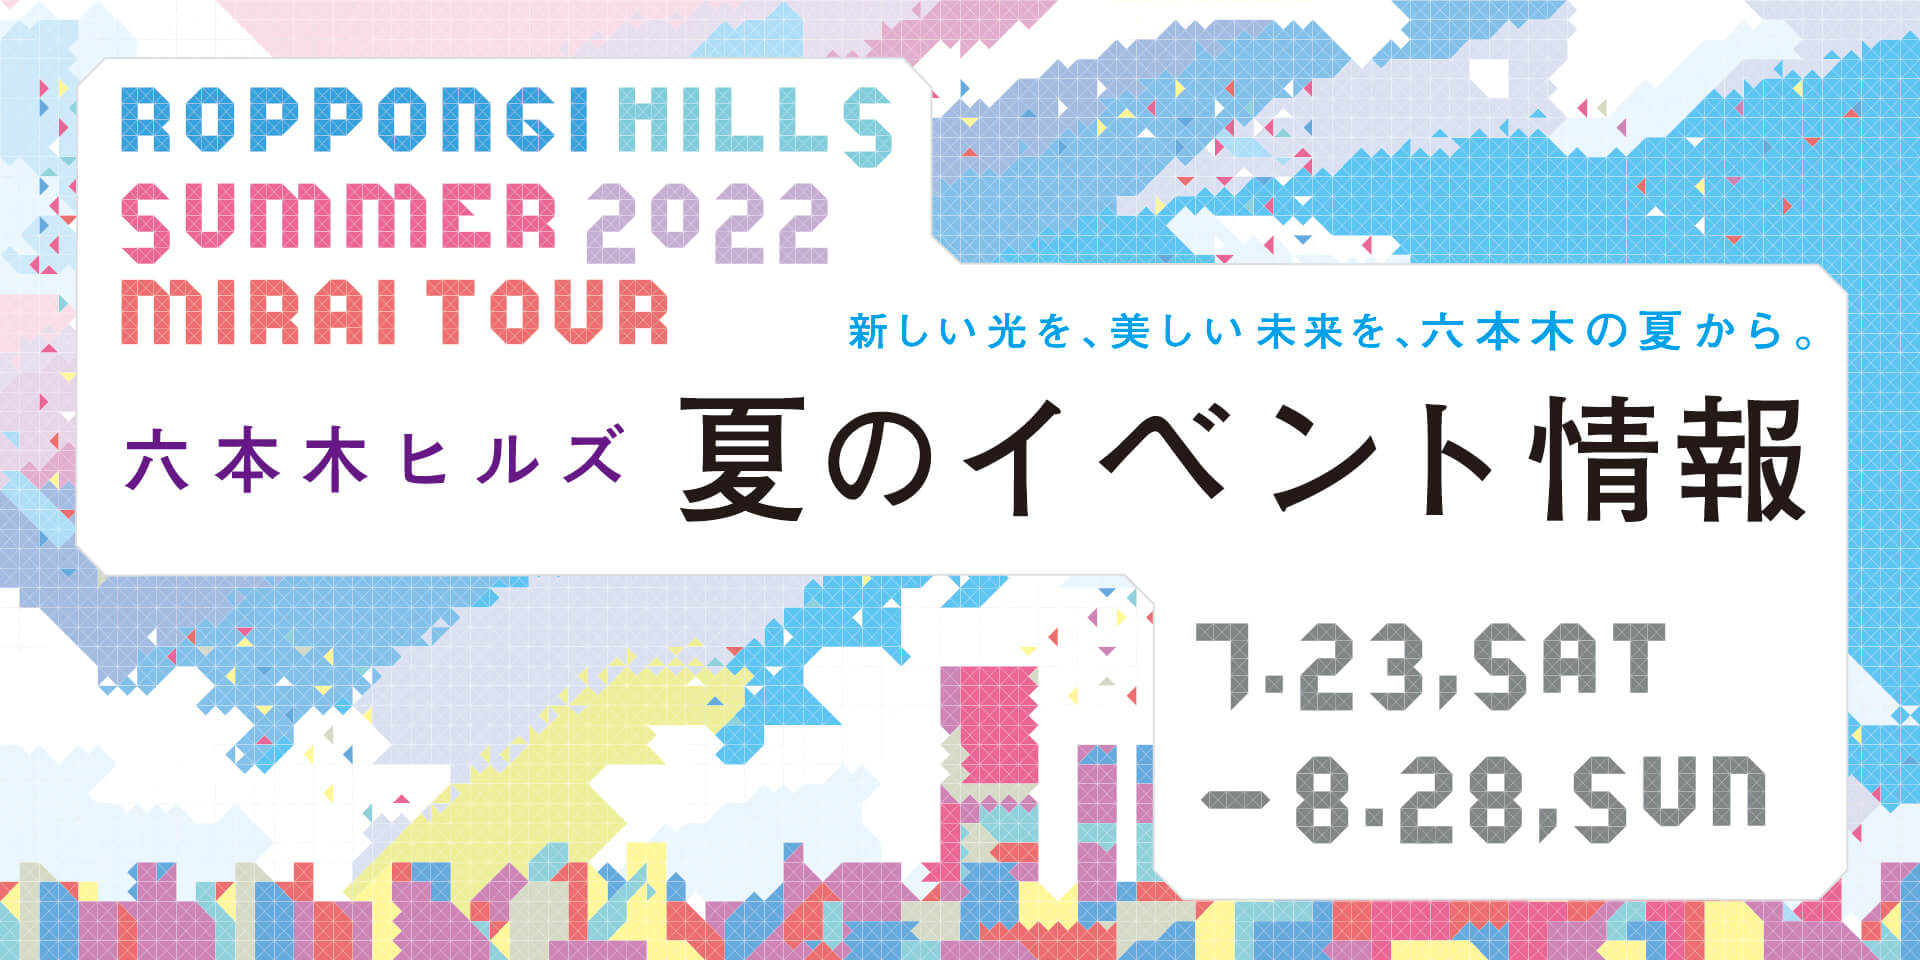 Roppongi Hills Summer 22 Mirai Tour 六本木ヒルズ Roppongi Hills